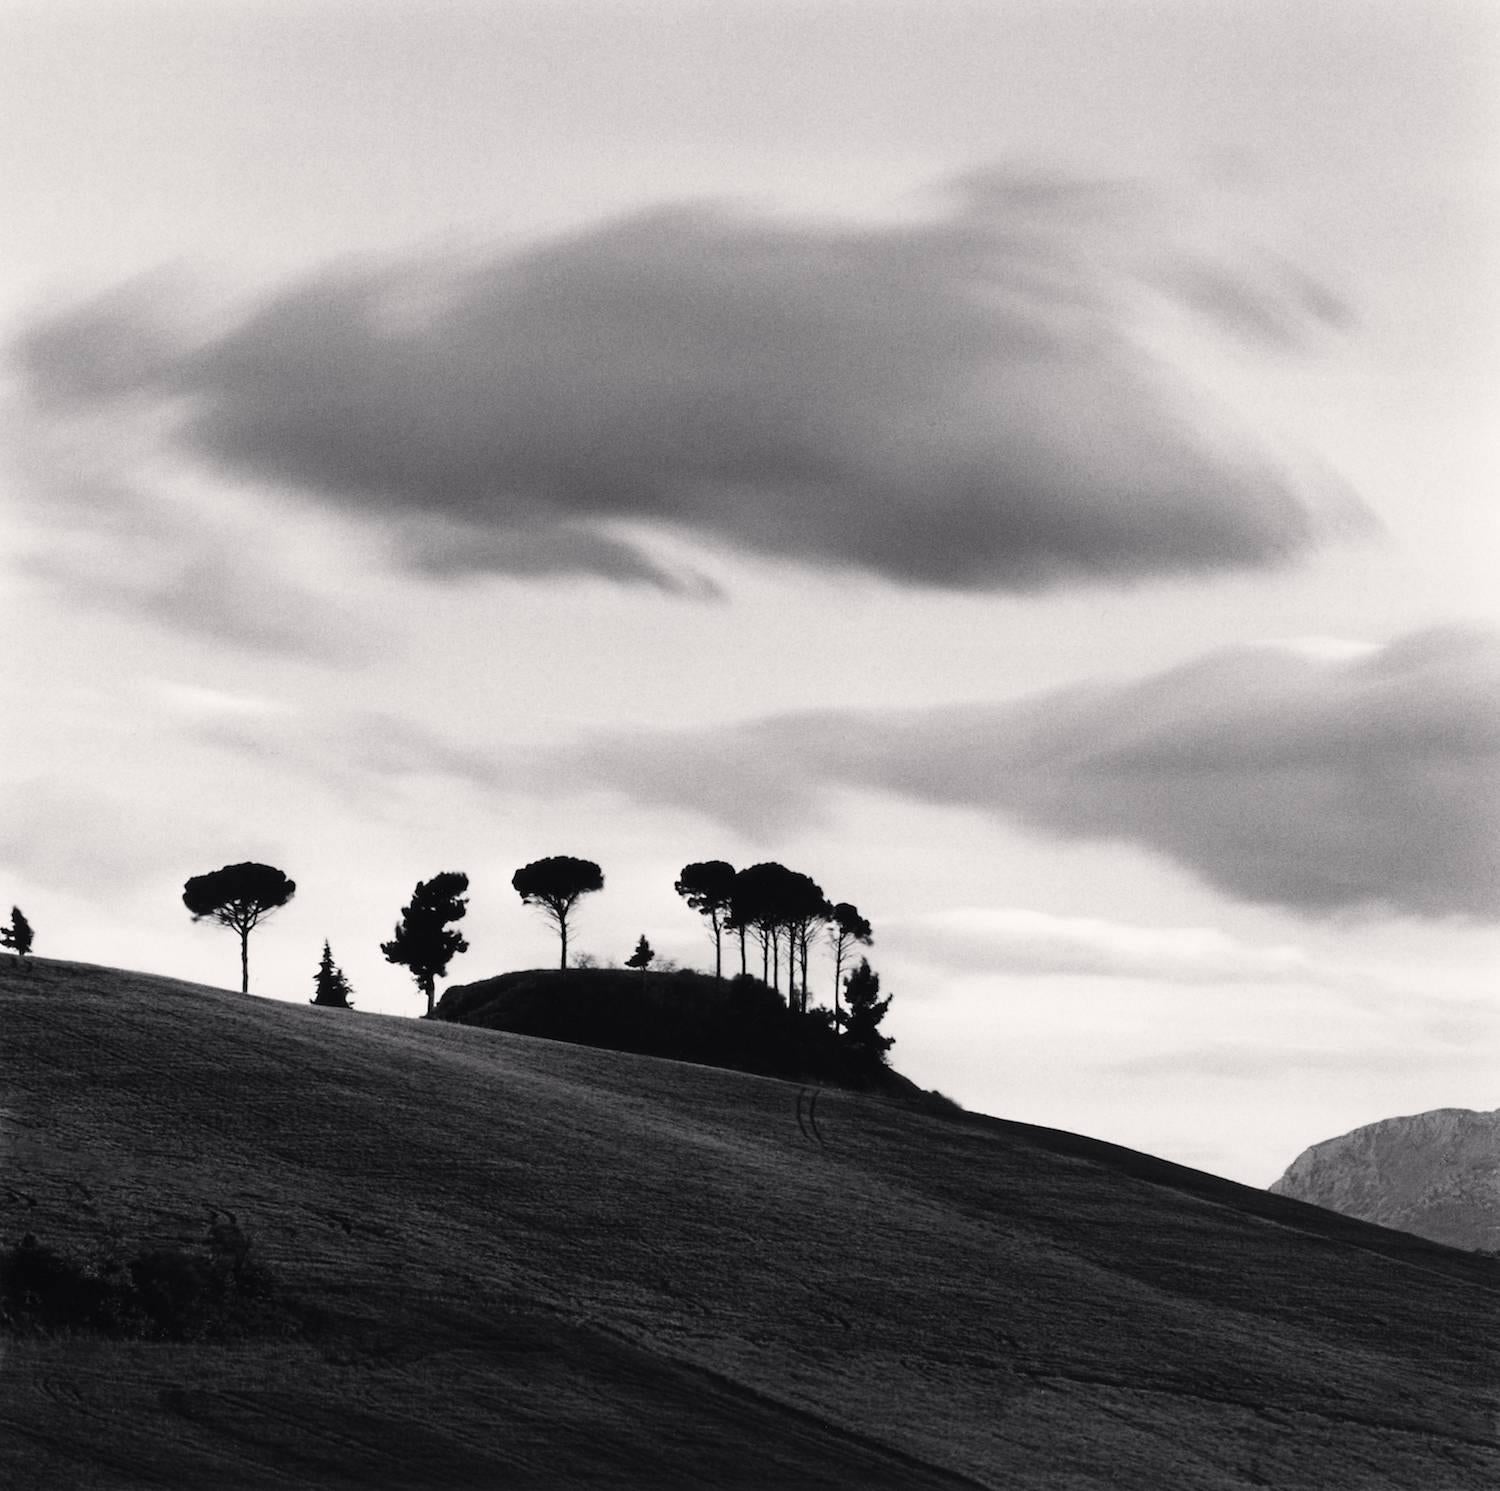 Michael Kenna Black and White Photograph - Pine Trees at Dusk, Loreto Aprutino, Abruzzo, Italy